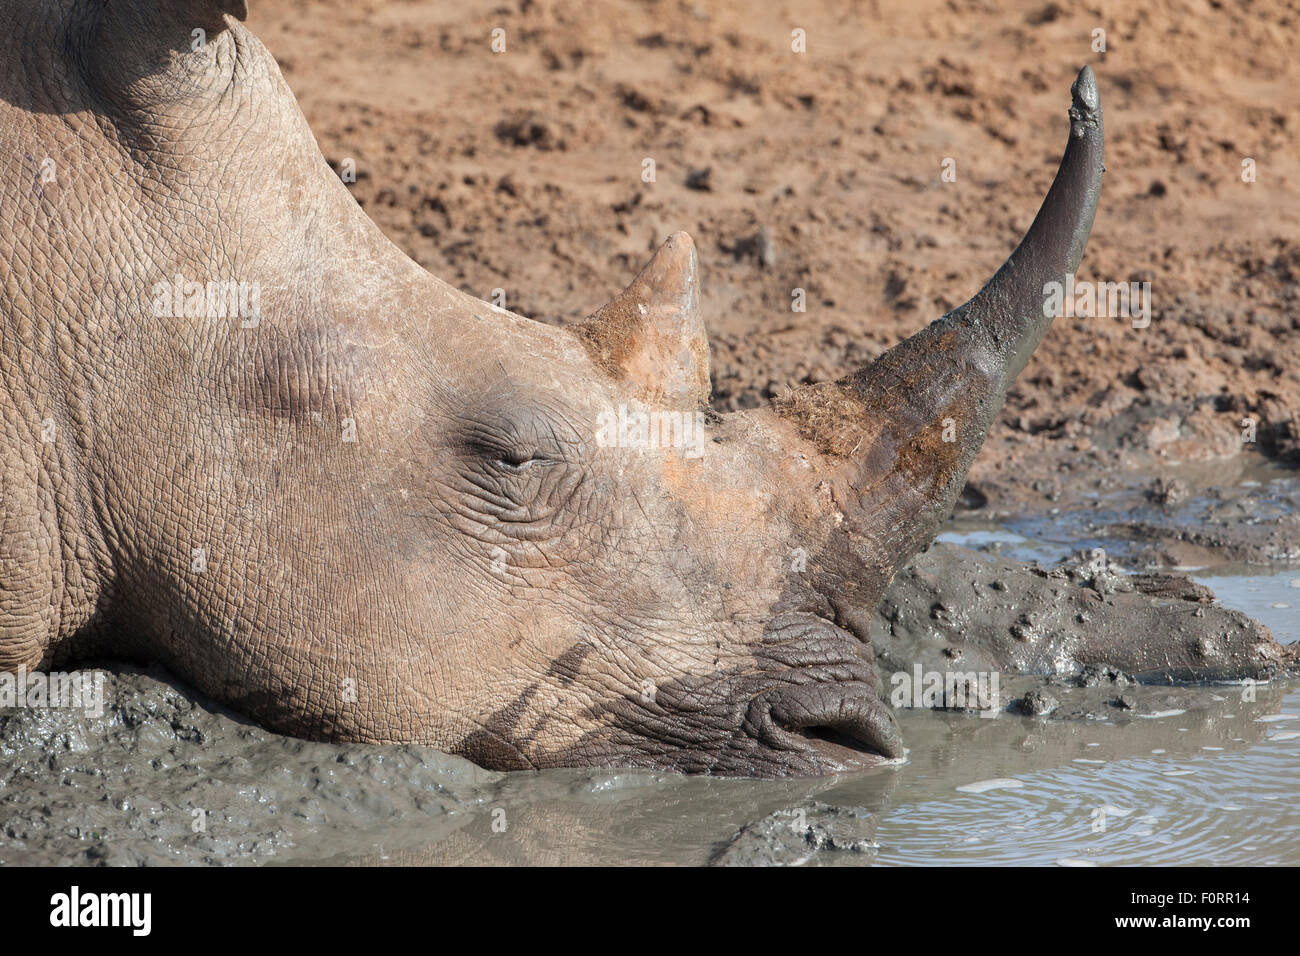 White Rhino (Ceratotherium simum) di appoggio, Kumasinga foro per l'acqua, Mkhuze Game Reserve, KwaZulu Natal, Sud Africa Foto Stock